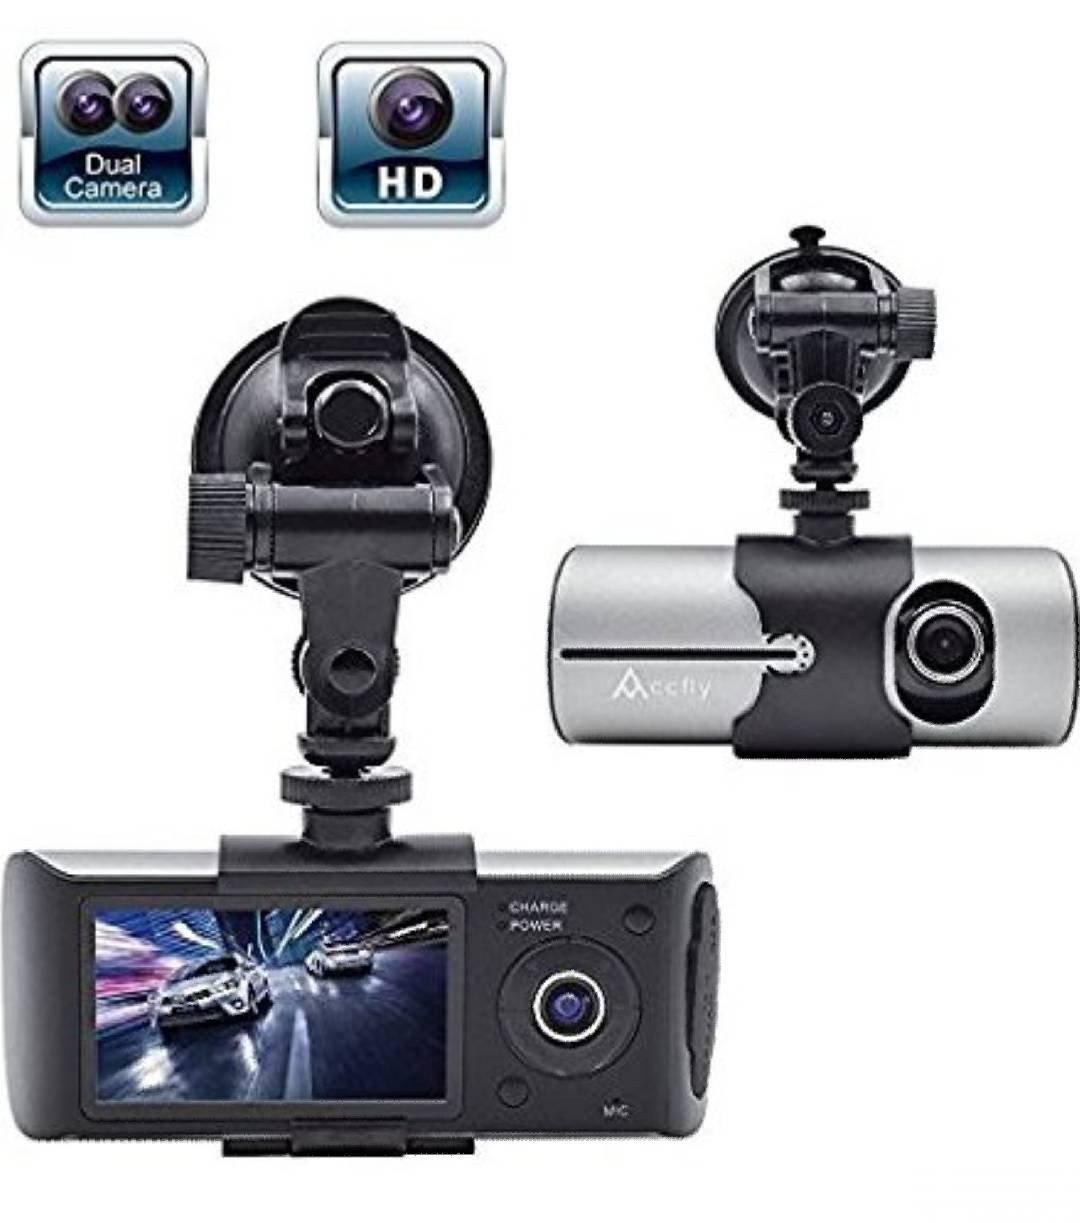 Auto Kamera Dupla kamera+GPS R300 Snima i napred i nazad - A365 shop